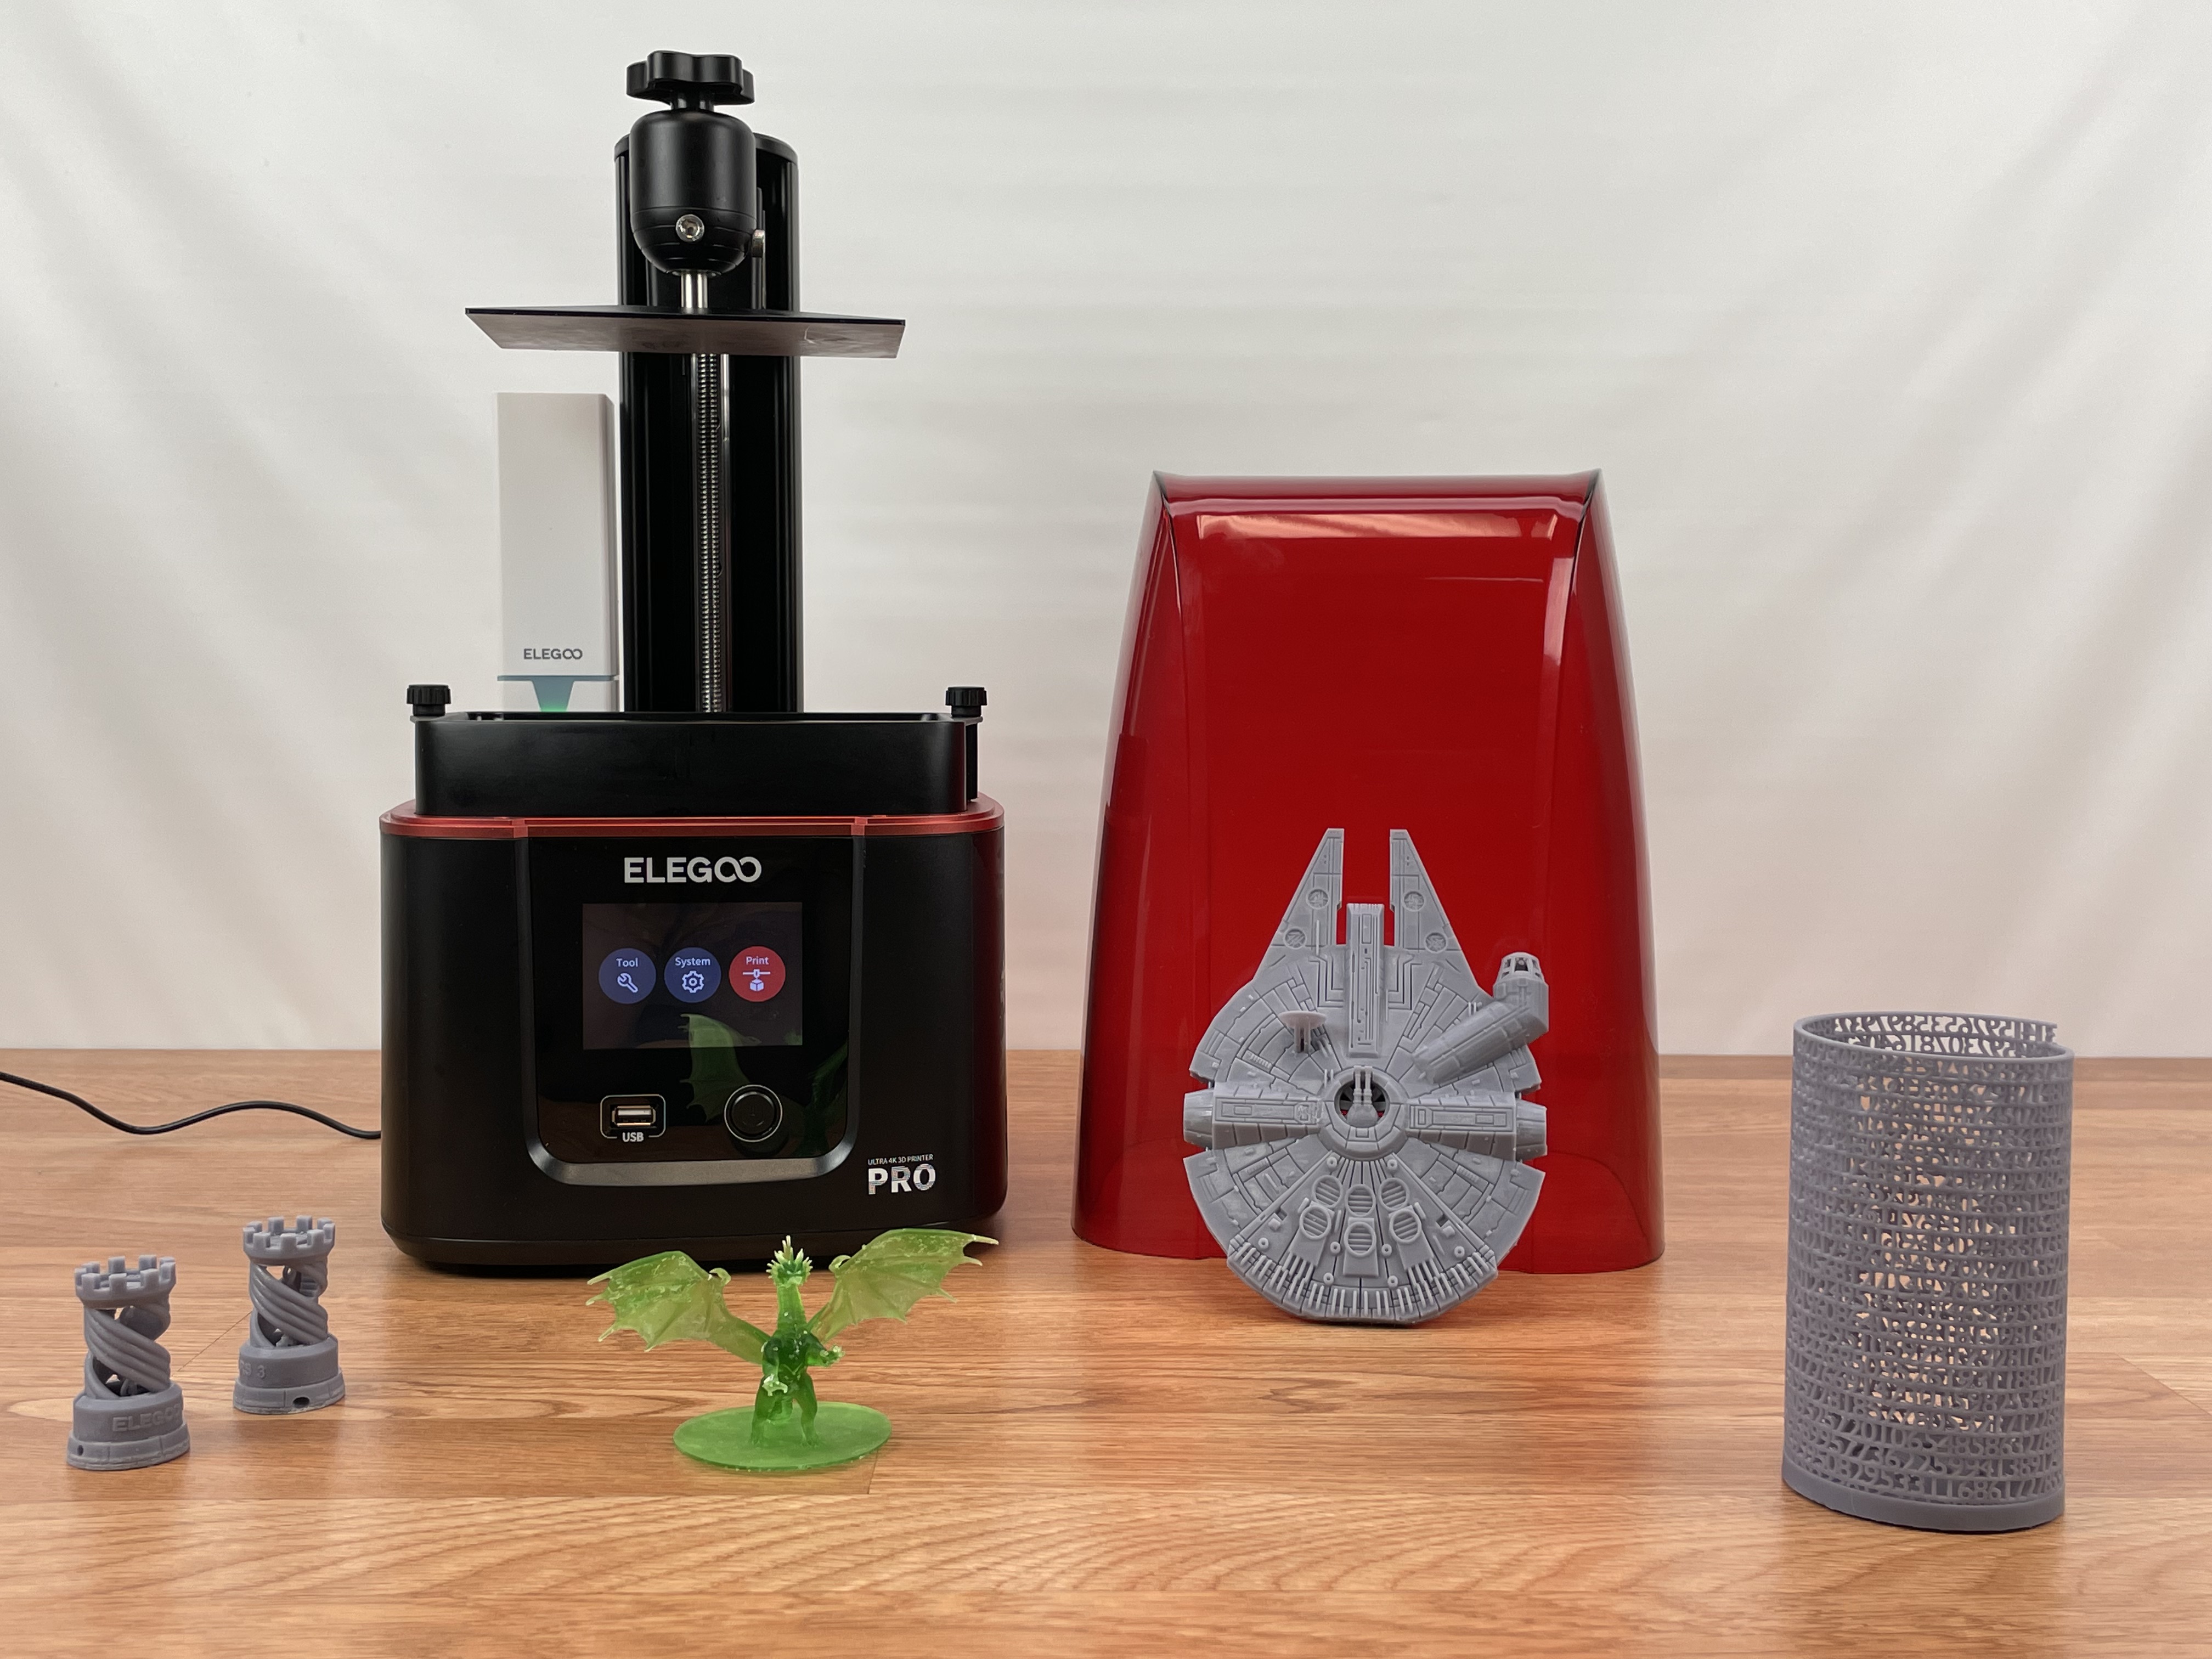 Elegoo Mars 3 Pro Resin Printer Review: Elegoo's Latest Small